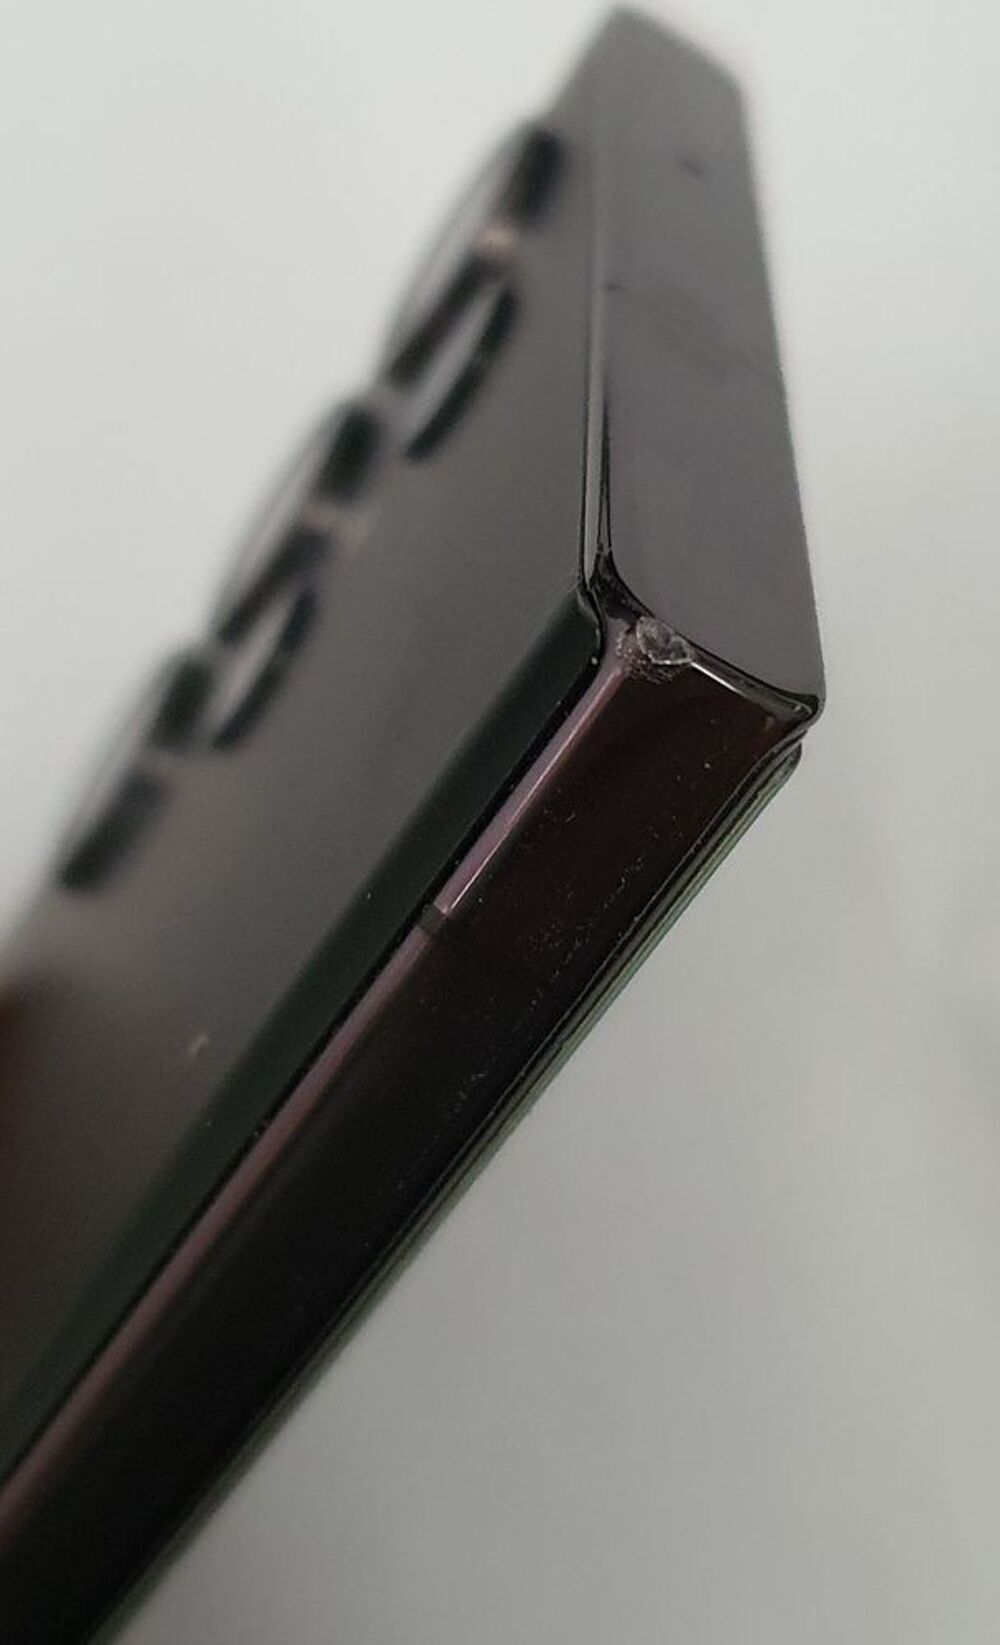 Samsung Galaxy S23 Ultra 512 Go noir Tlphones et tablettes